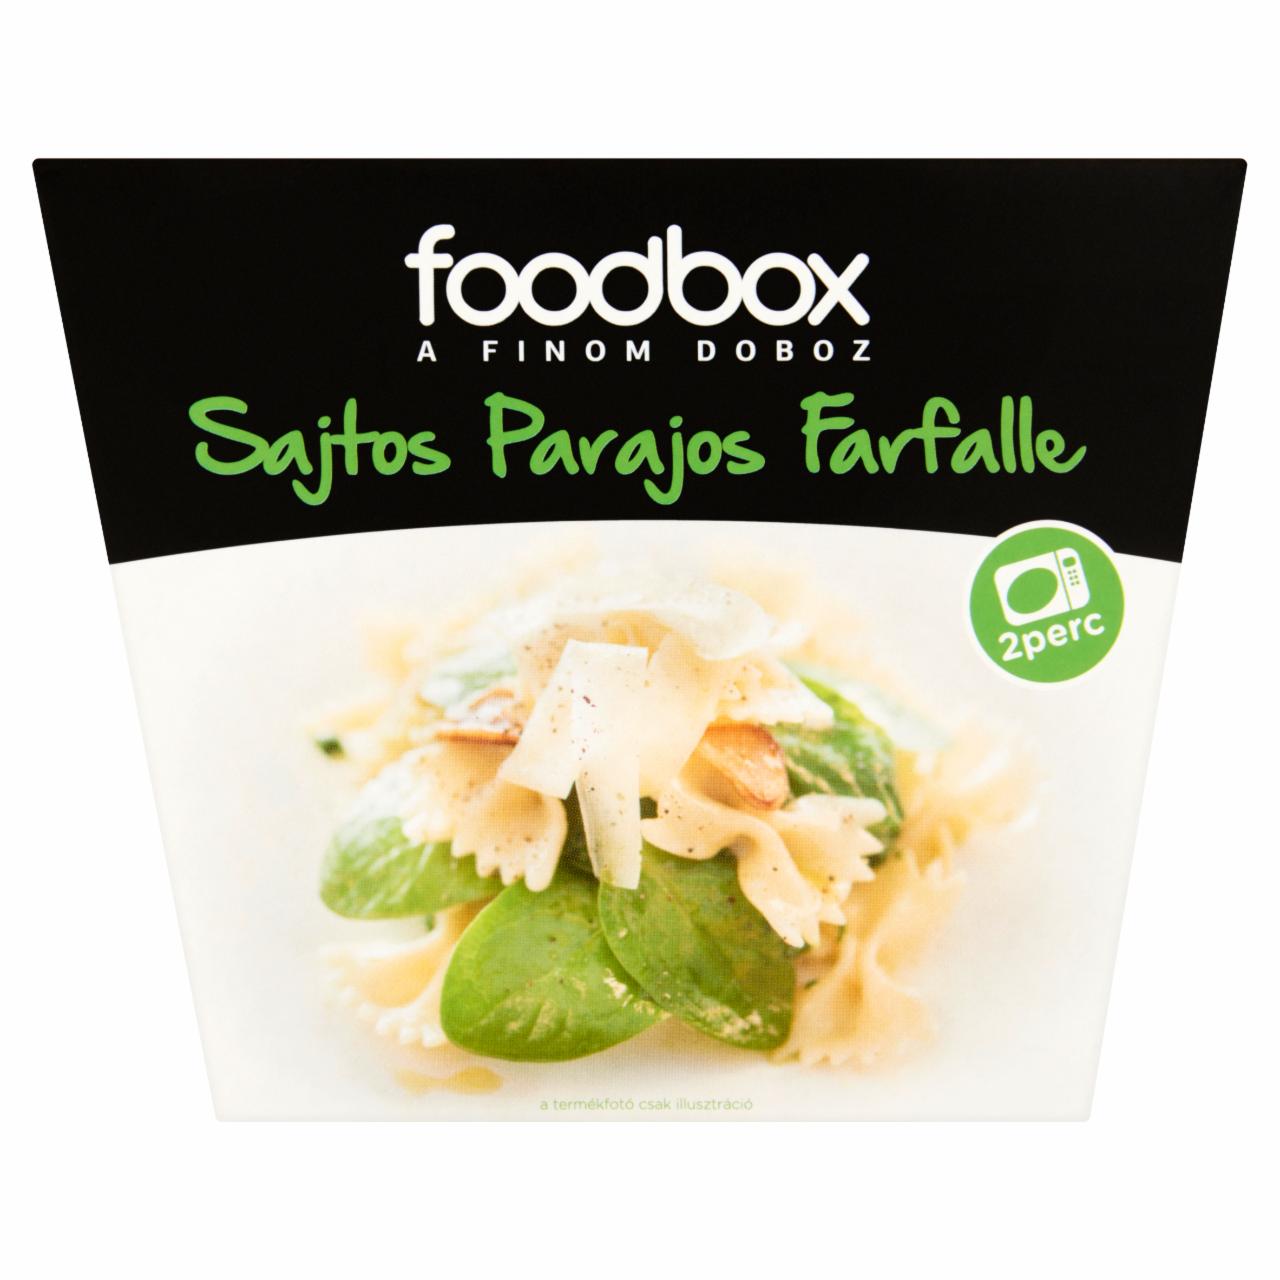 Képek - Foodbox sajtos parajos farfalle 330 g